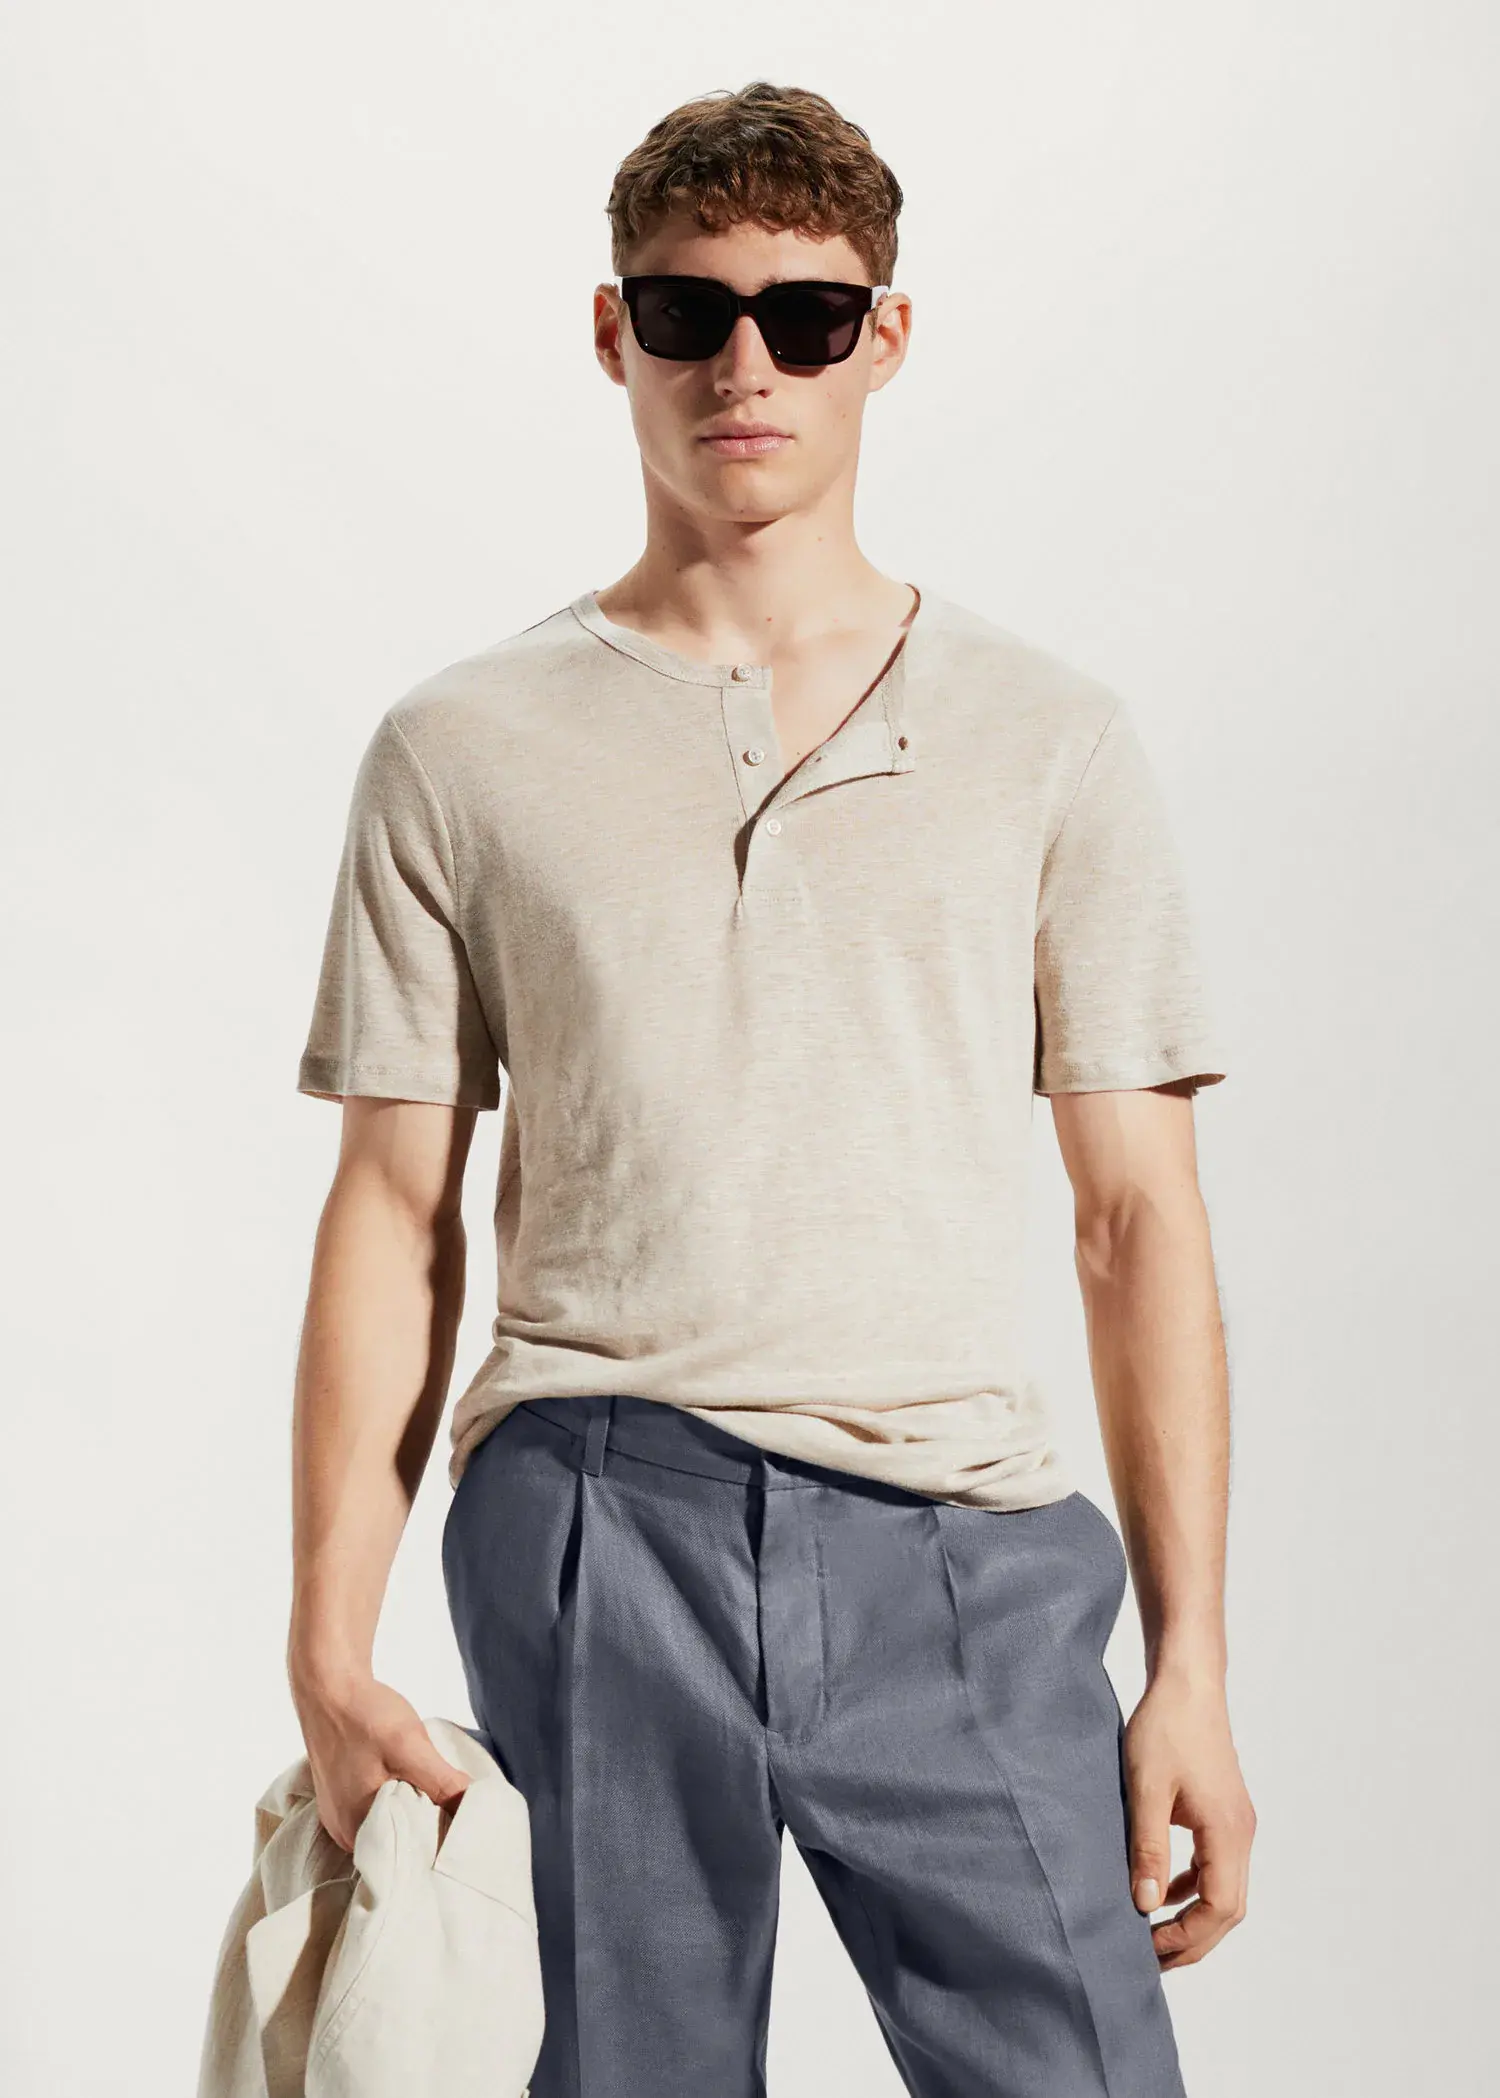 Mango 100% linen Henley t-shirt. a man wearing sunglasses standing in front of a white wall. 